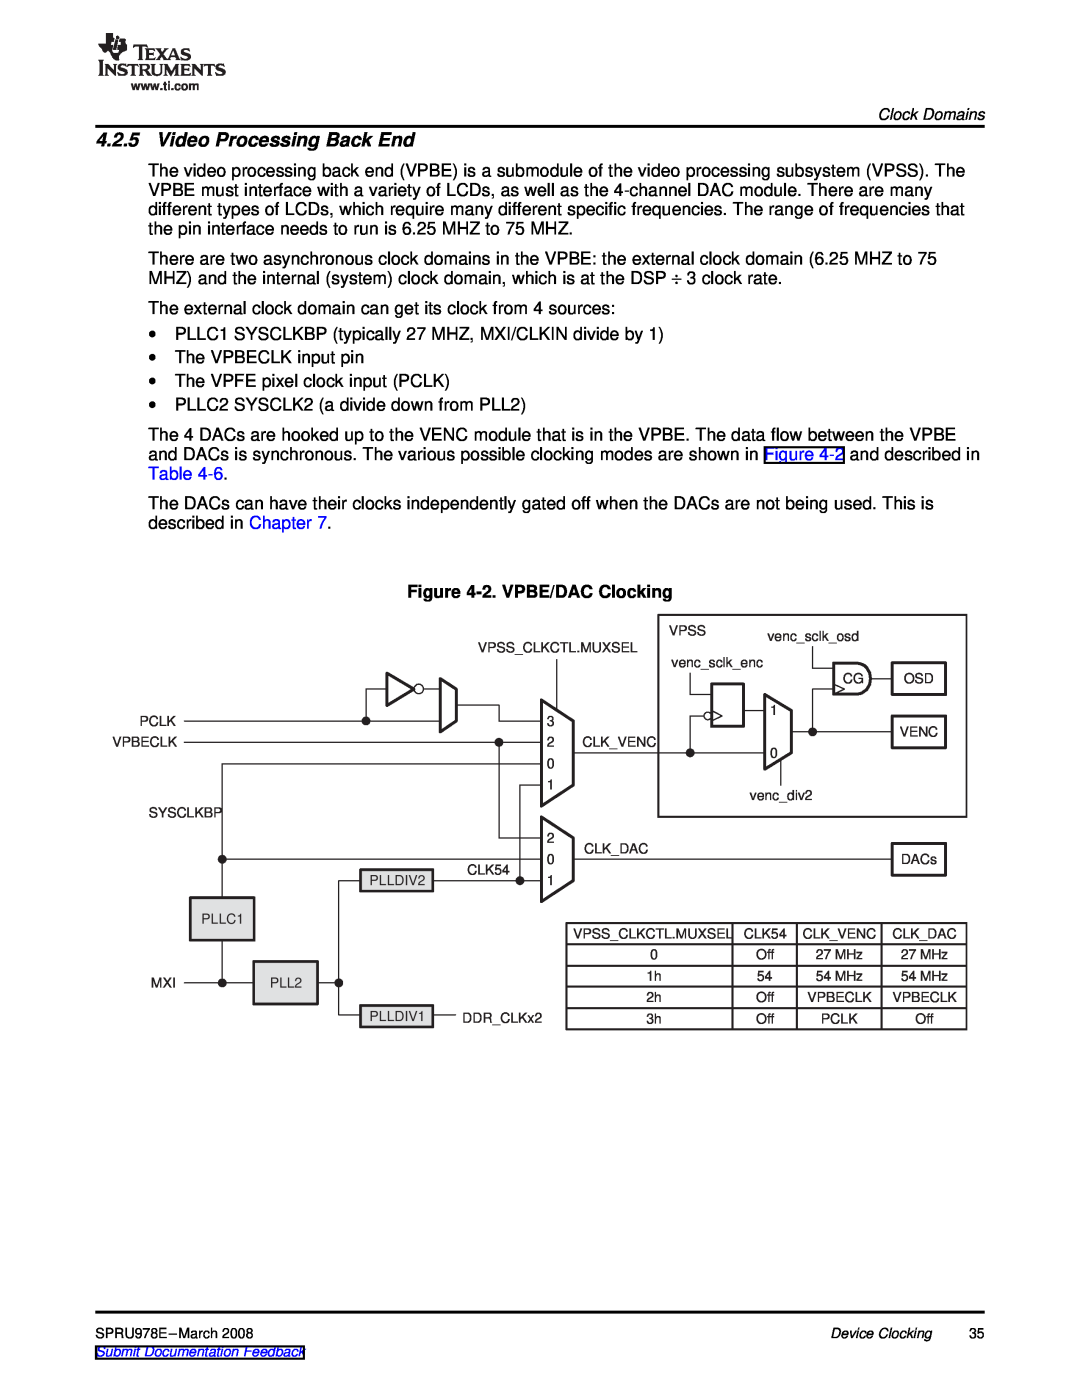 Texas Instruments TMS320DM643x manual Video Processing Back End, 2. VPBE/DAC Clocking 